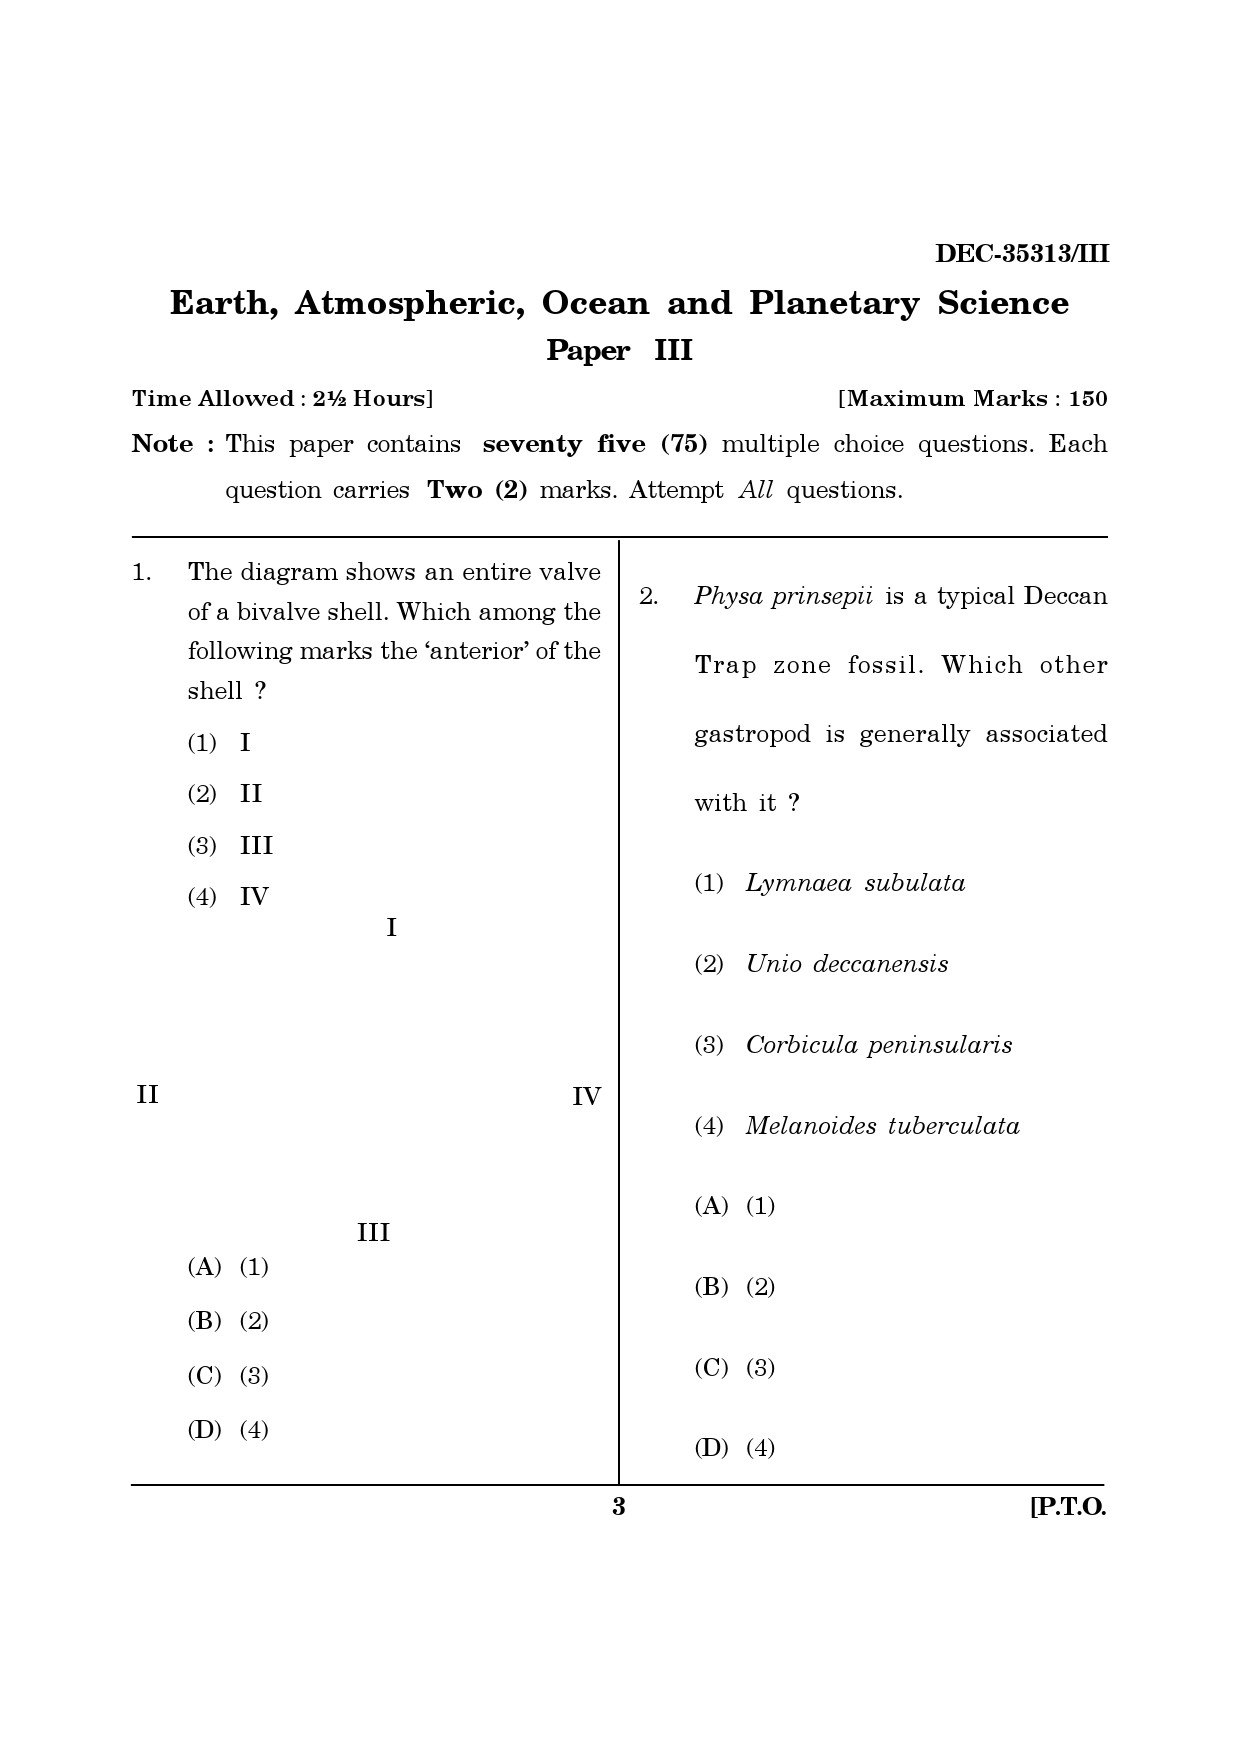 Maharashtra SET Earth Atmospheric Ocean Planetary Science Question Paper III December 2013 2